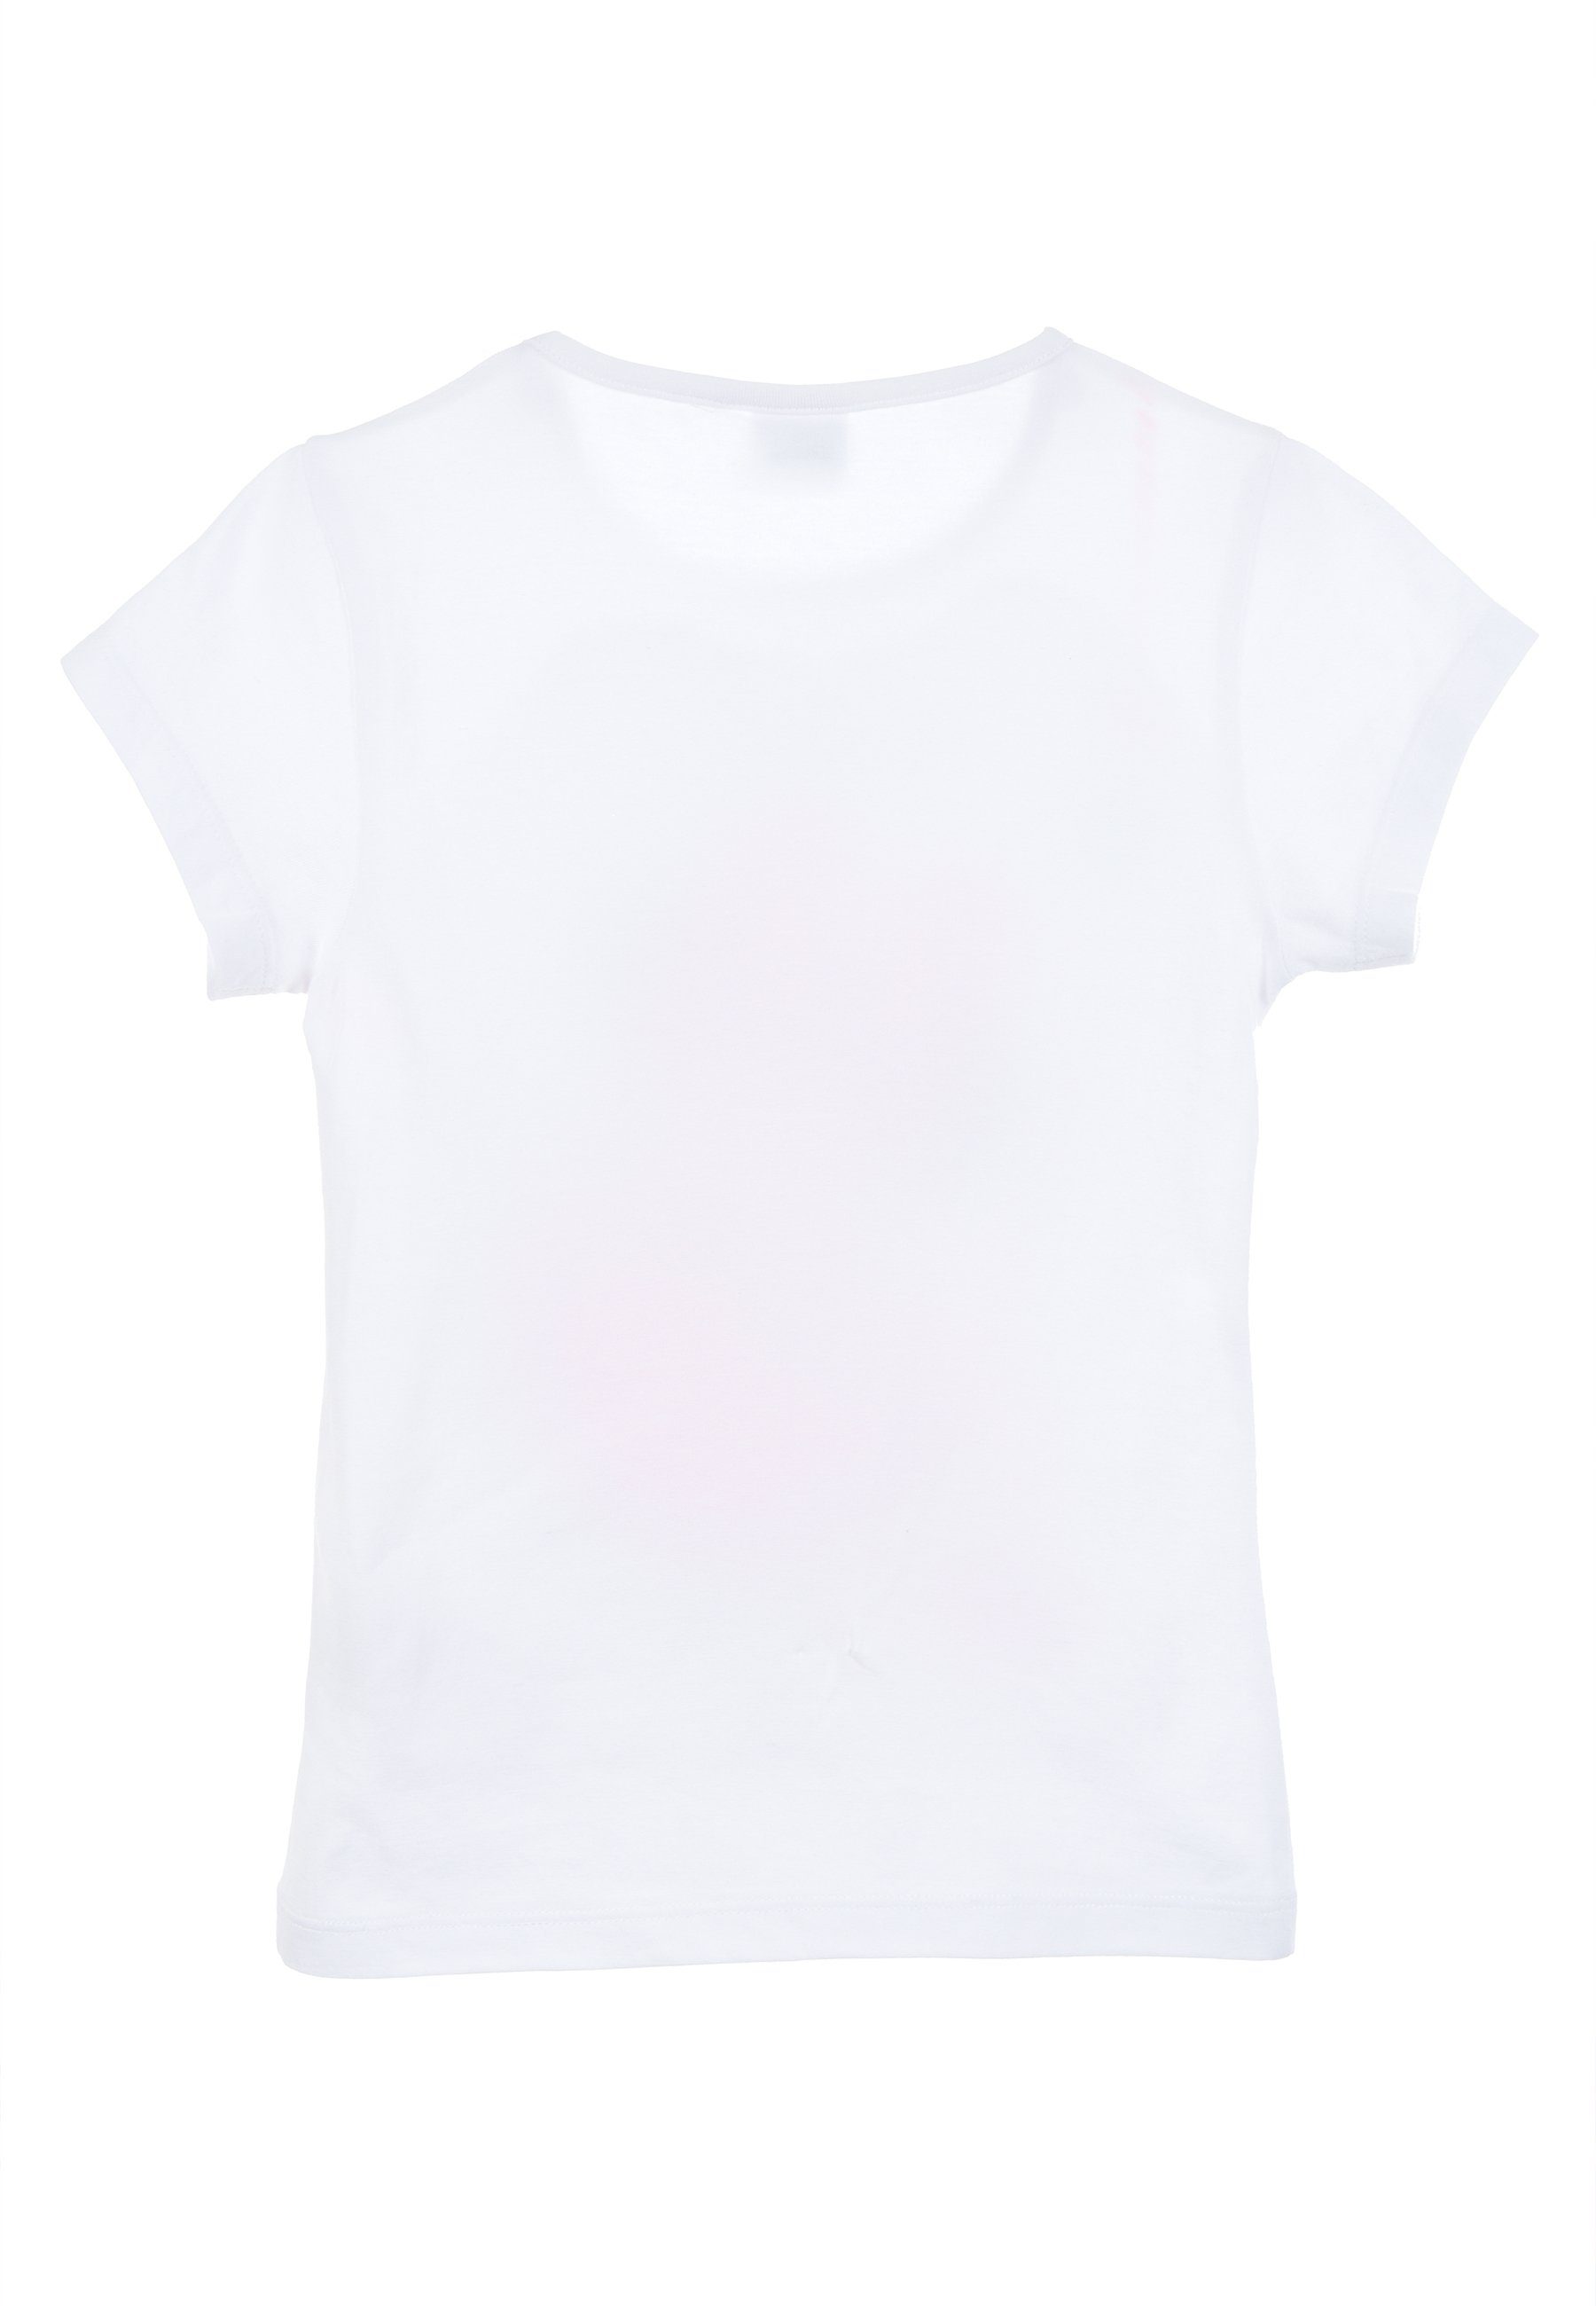 T-Shirt Sommer Kinder Mädchen Mouse Oberteil Disney Weiß Kurzarm-Shirt Minnie